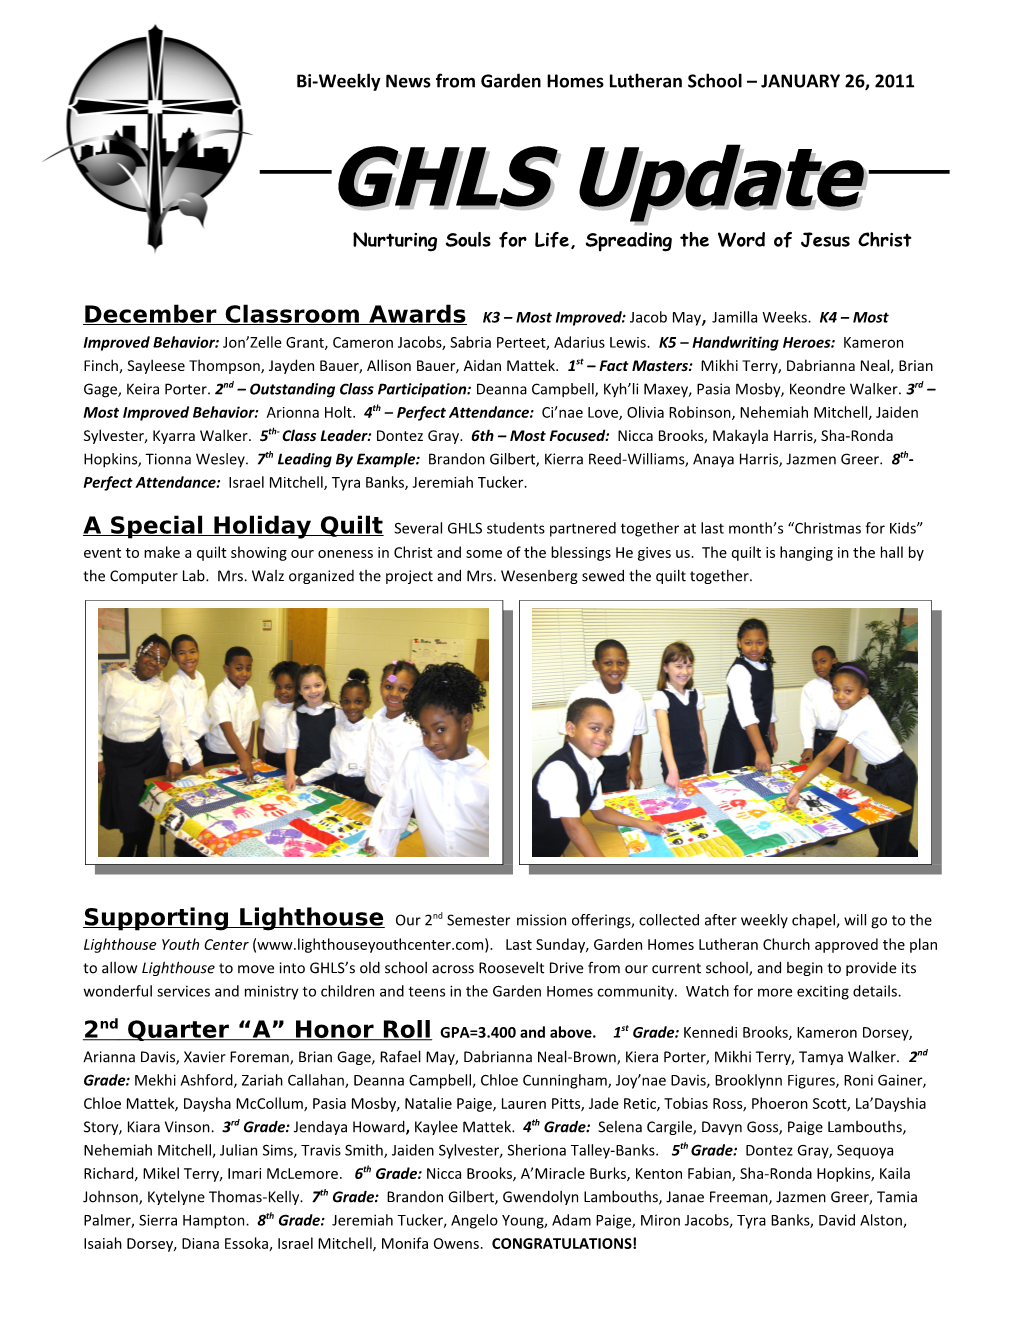 Bi-Weekly News from Garden Homes Lutheran School JANUARY 26, 2011 GHLS Update Nurturing